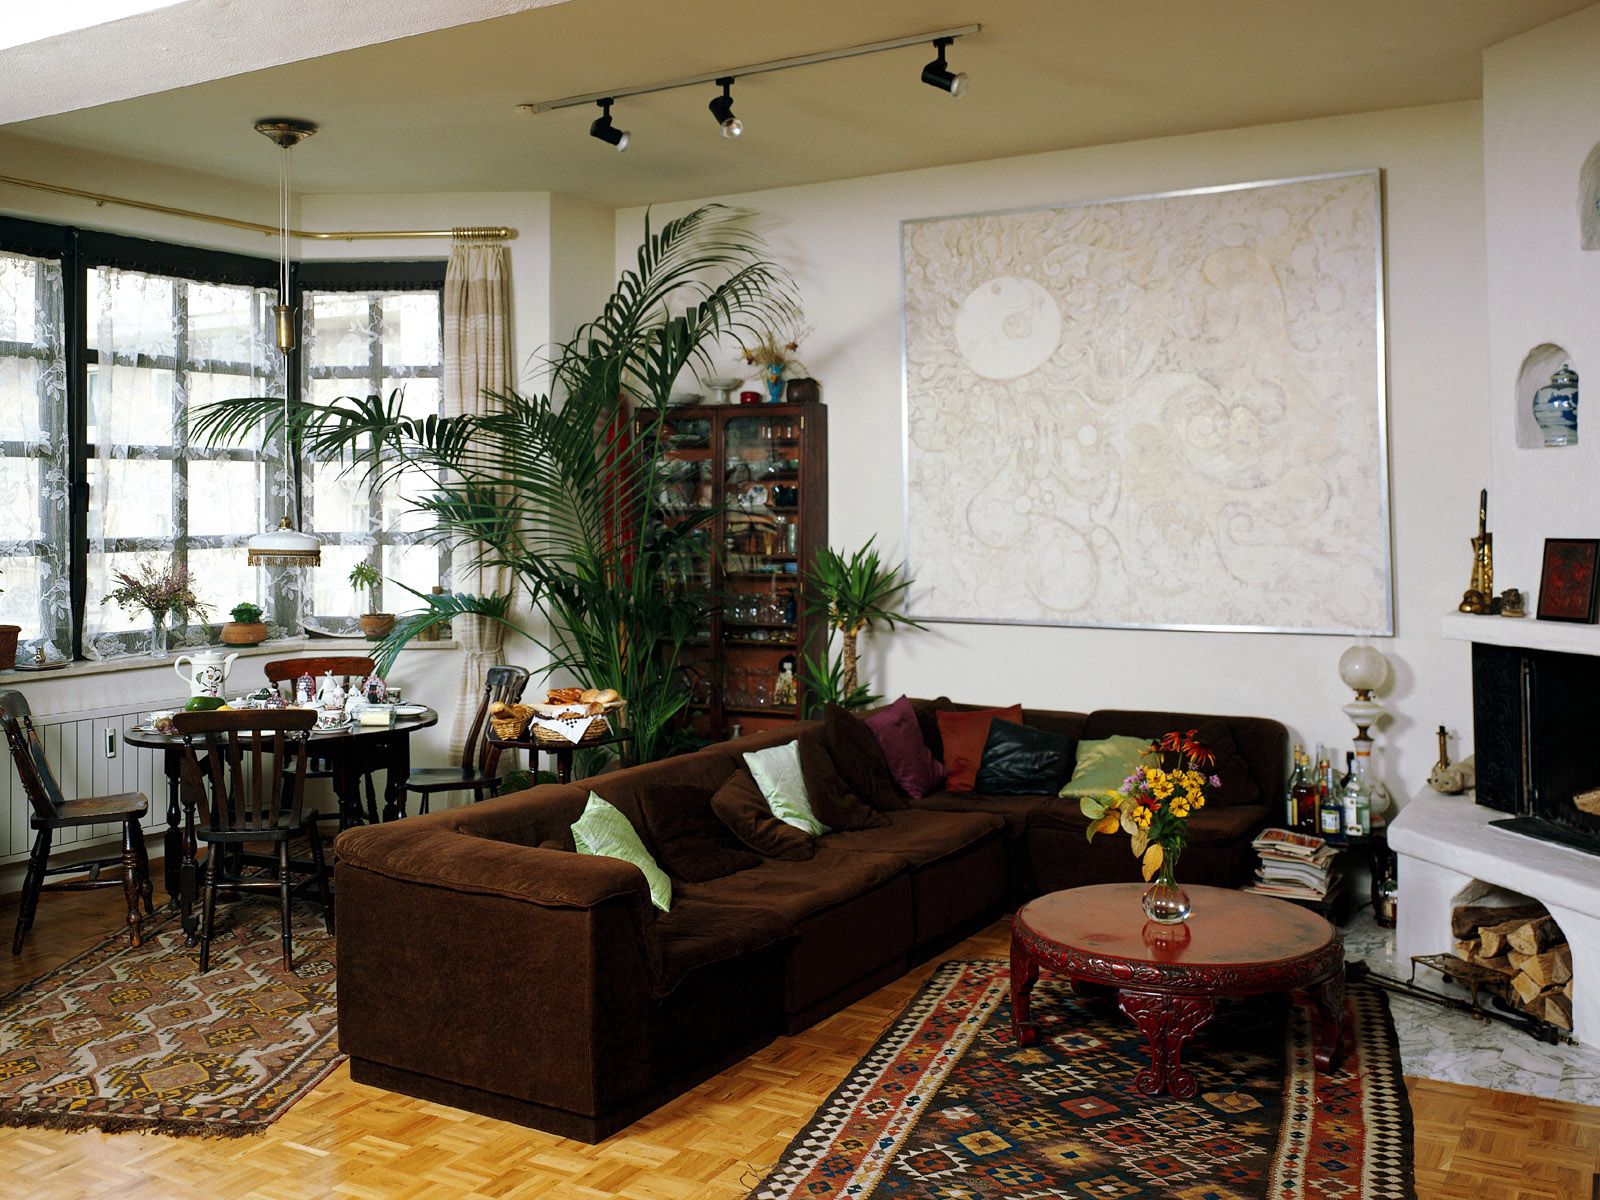 table, flowers, interior, miscellanea, miscellaneous, sofa, carpet